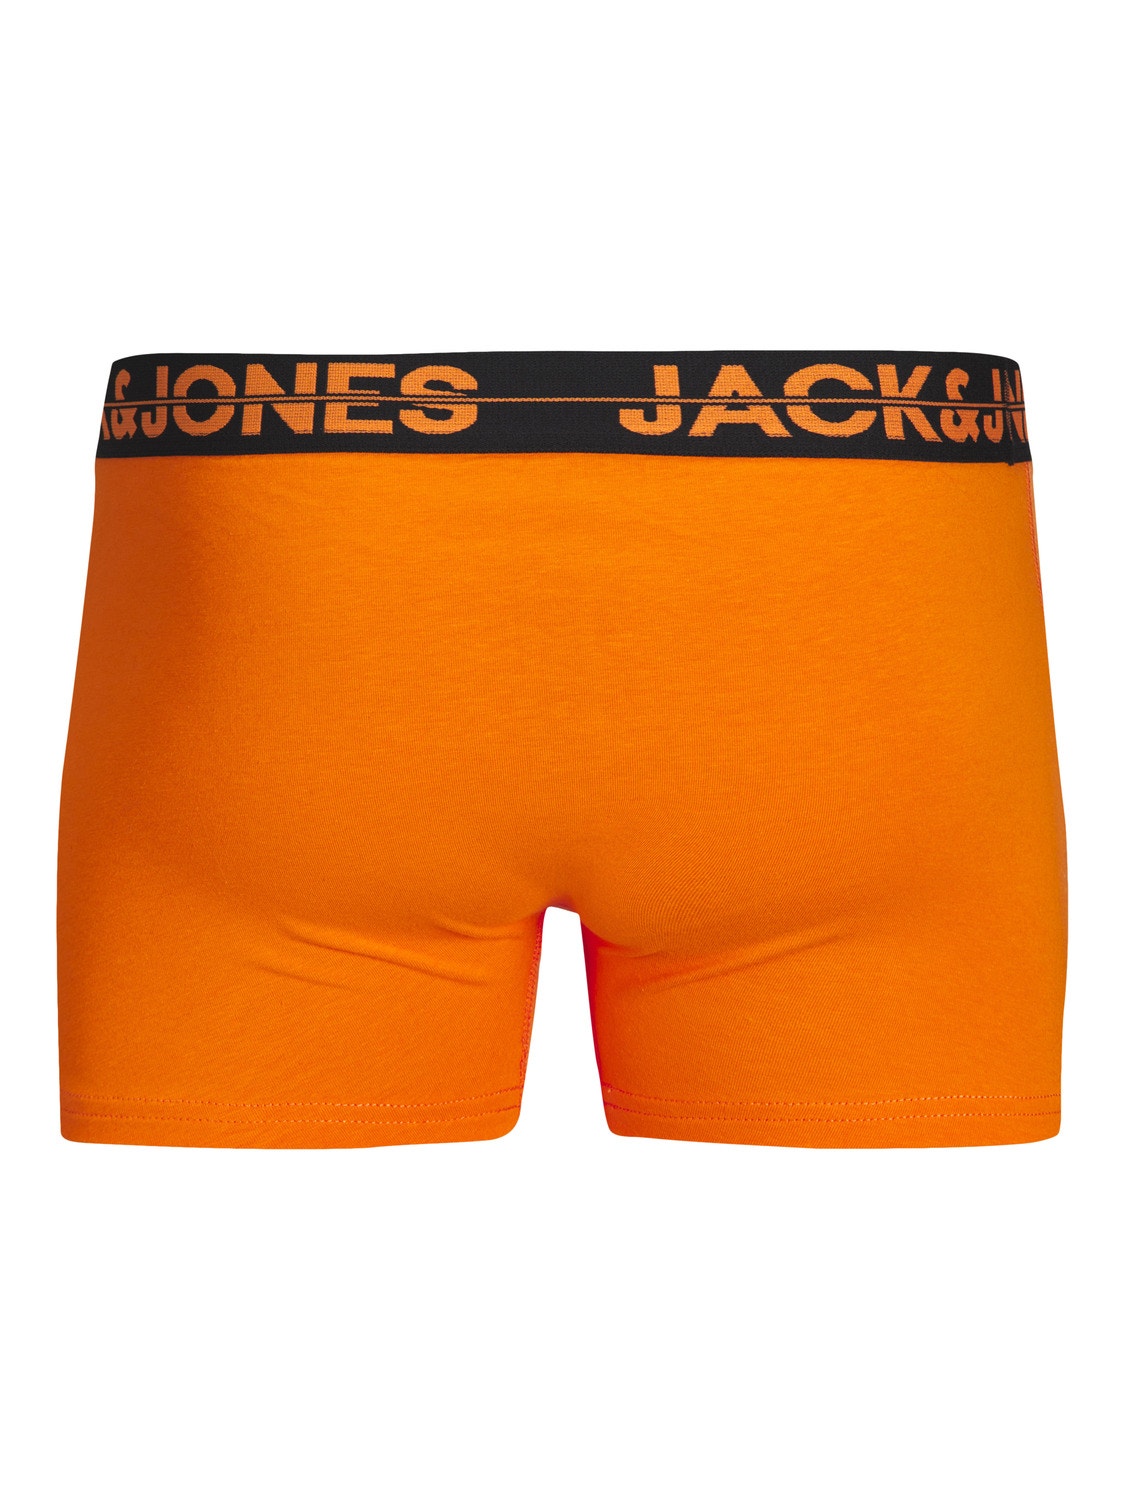 Jack & Jones 5-pak Trunks -Victoria Blue - 12251418